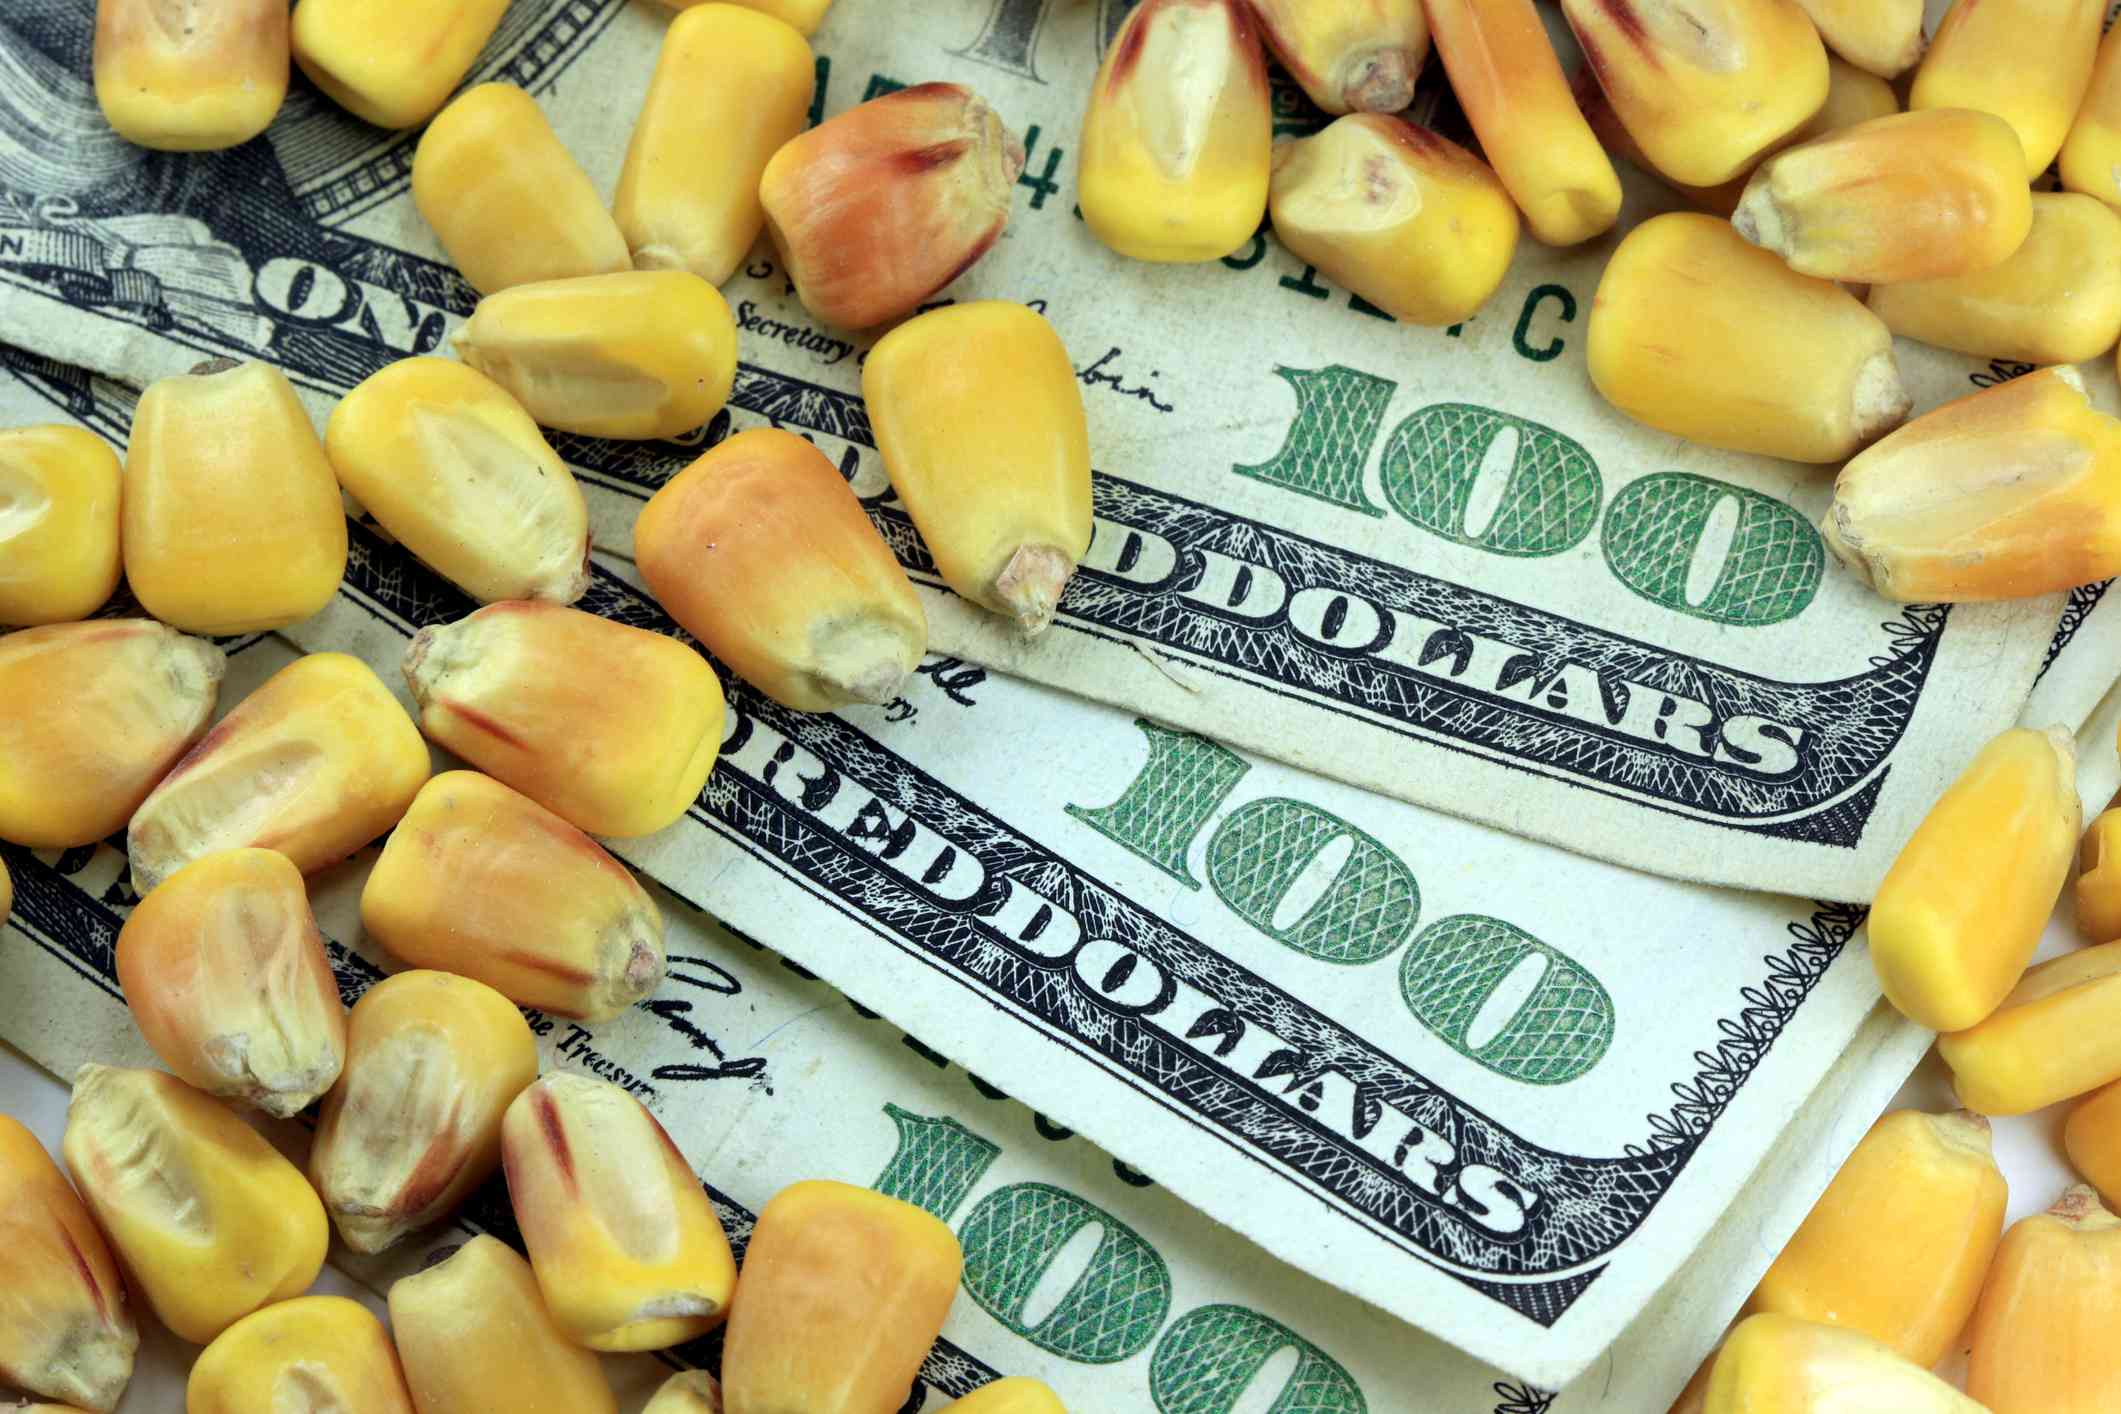 Fungible goods examples: Dollars bills and No. 2 corn.